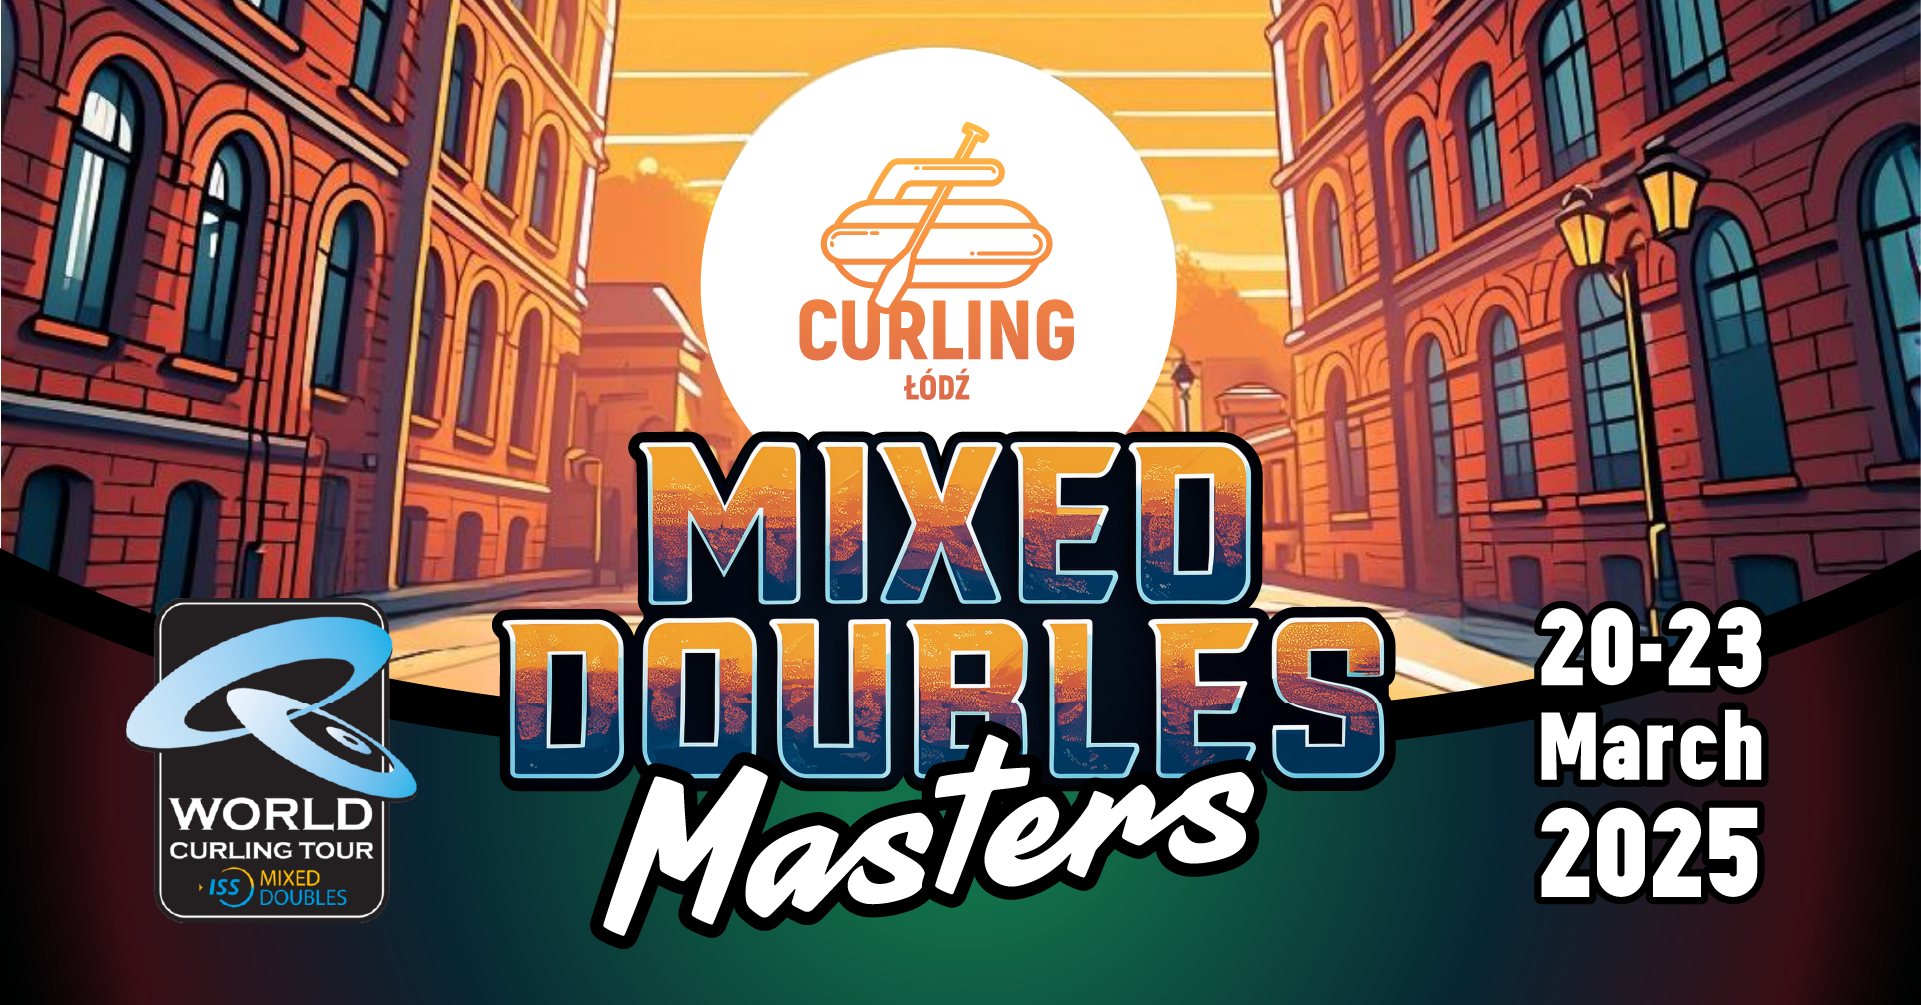 WCT Curling Łódź Mixed Doubles Masters 2025